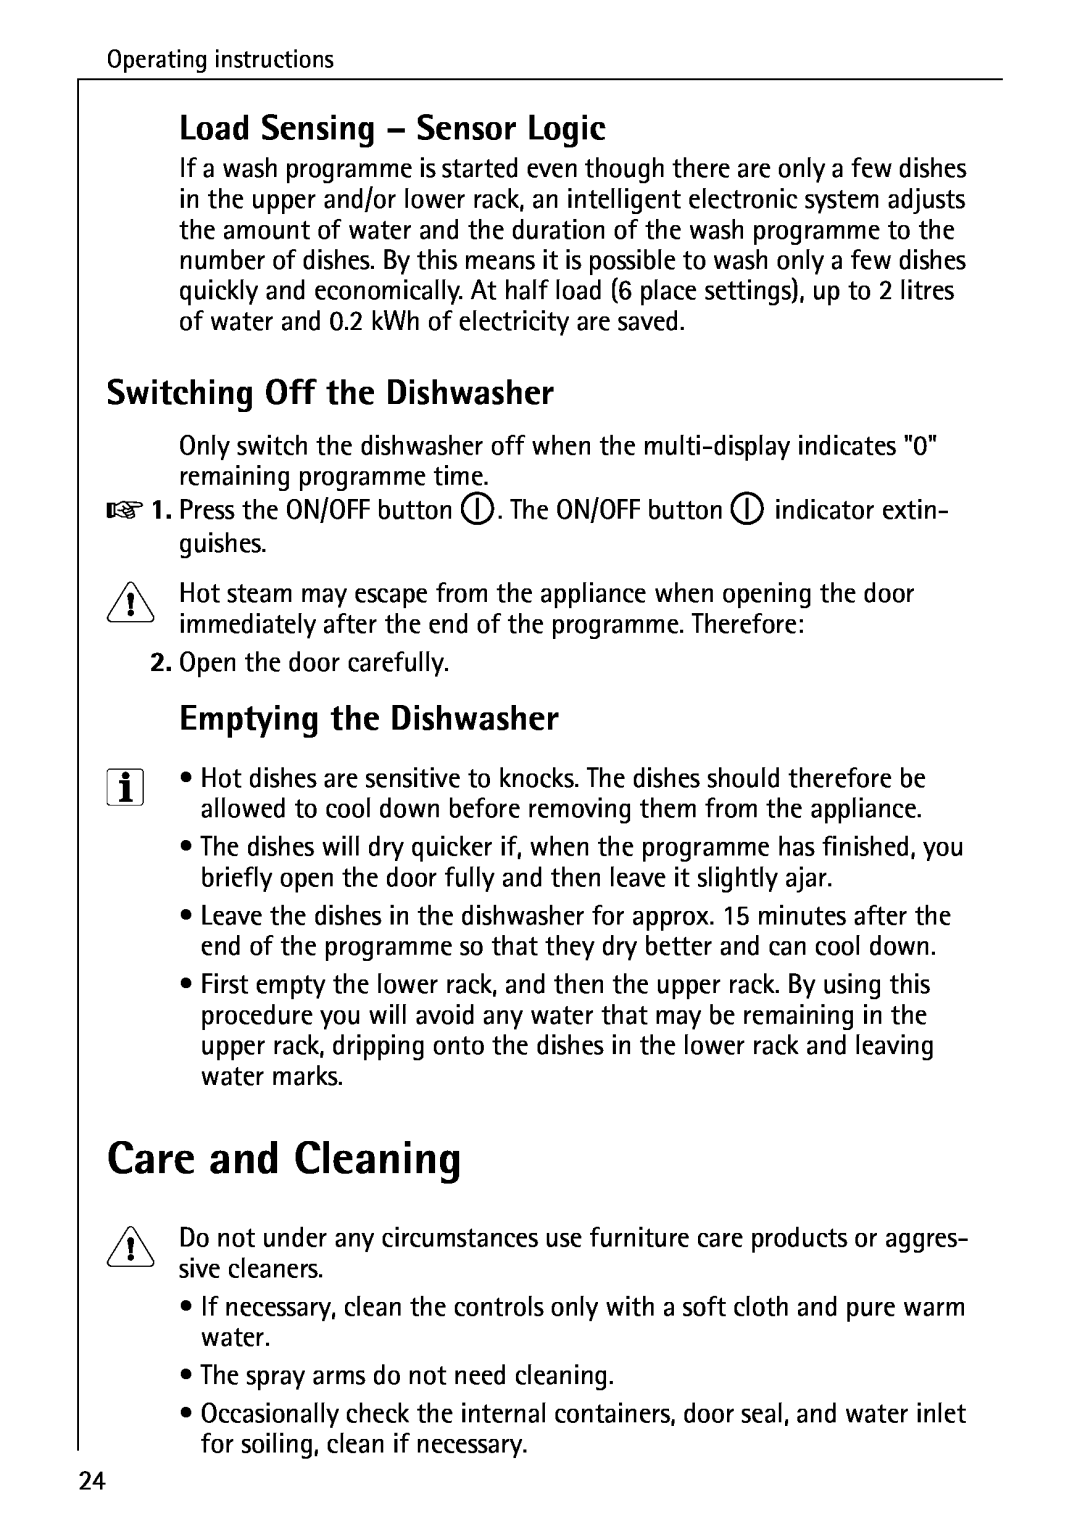 AEG 5071 manual Care and Cleaning, Load Sensing - Sensor Logic, Switching Off the Dishwasher, Emptying the Dishwasher 